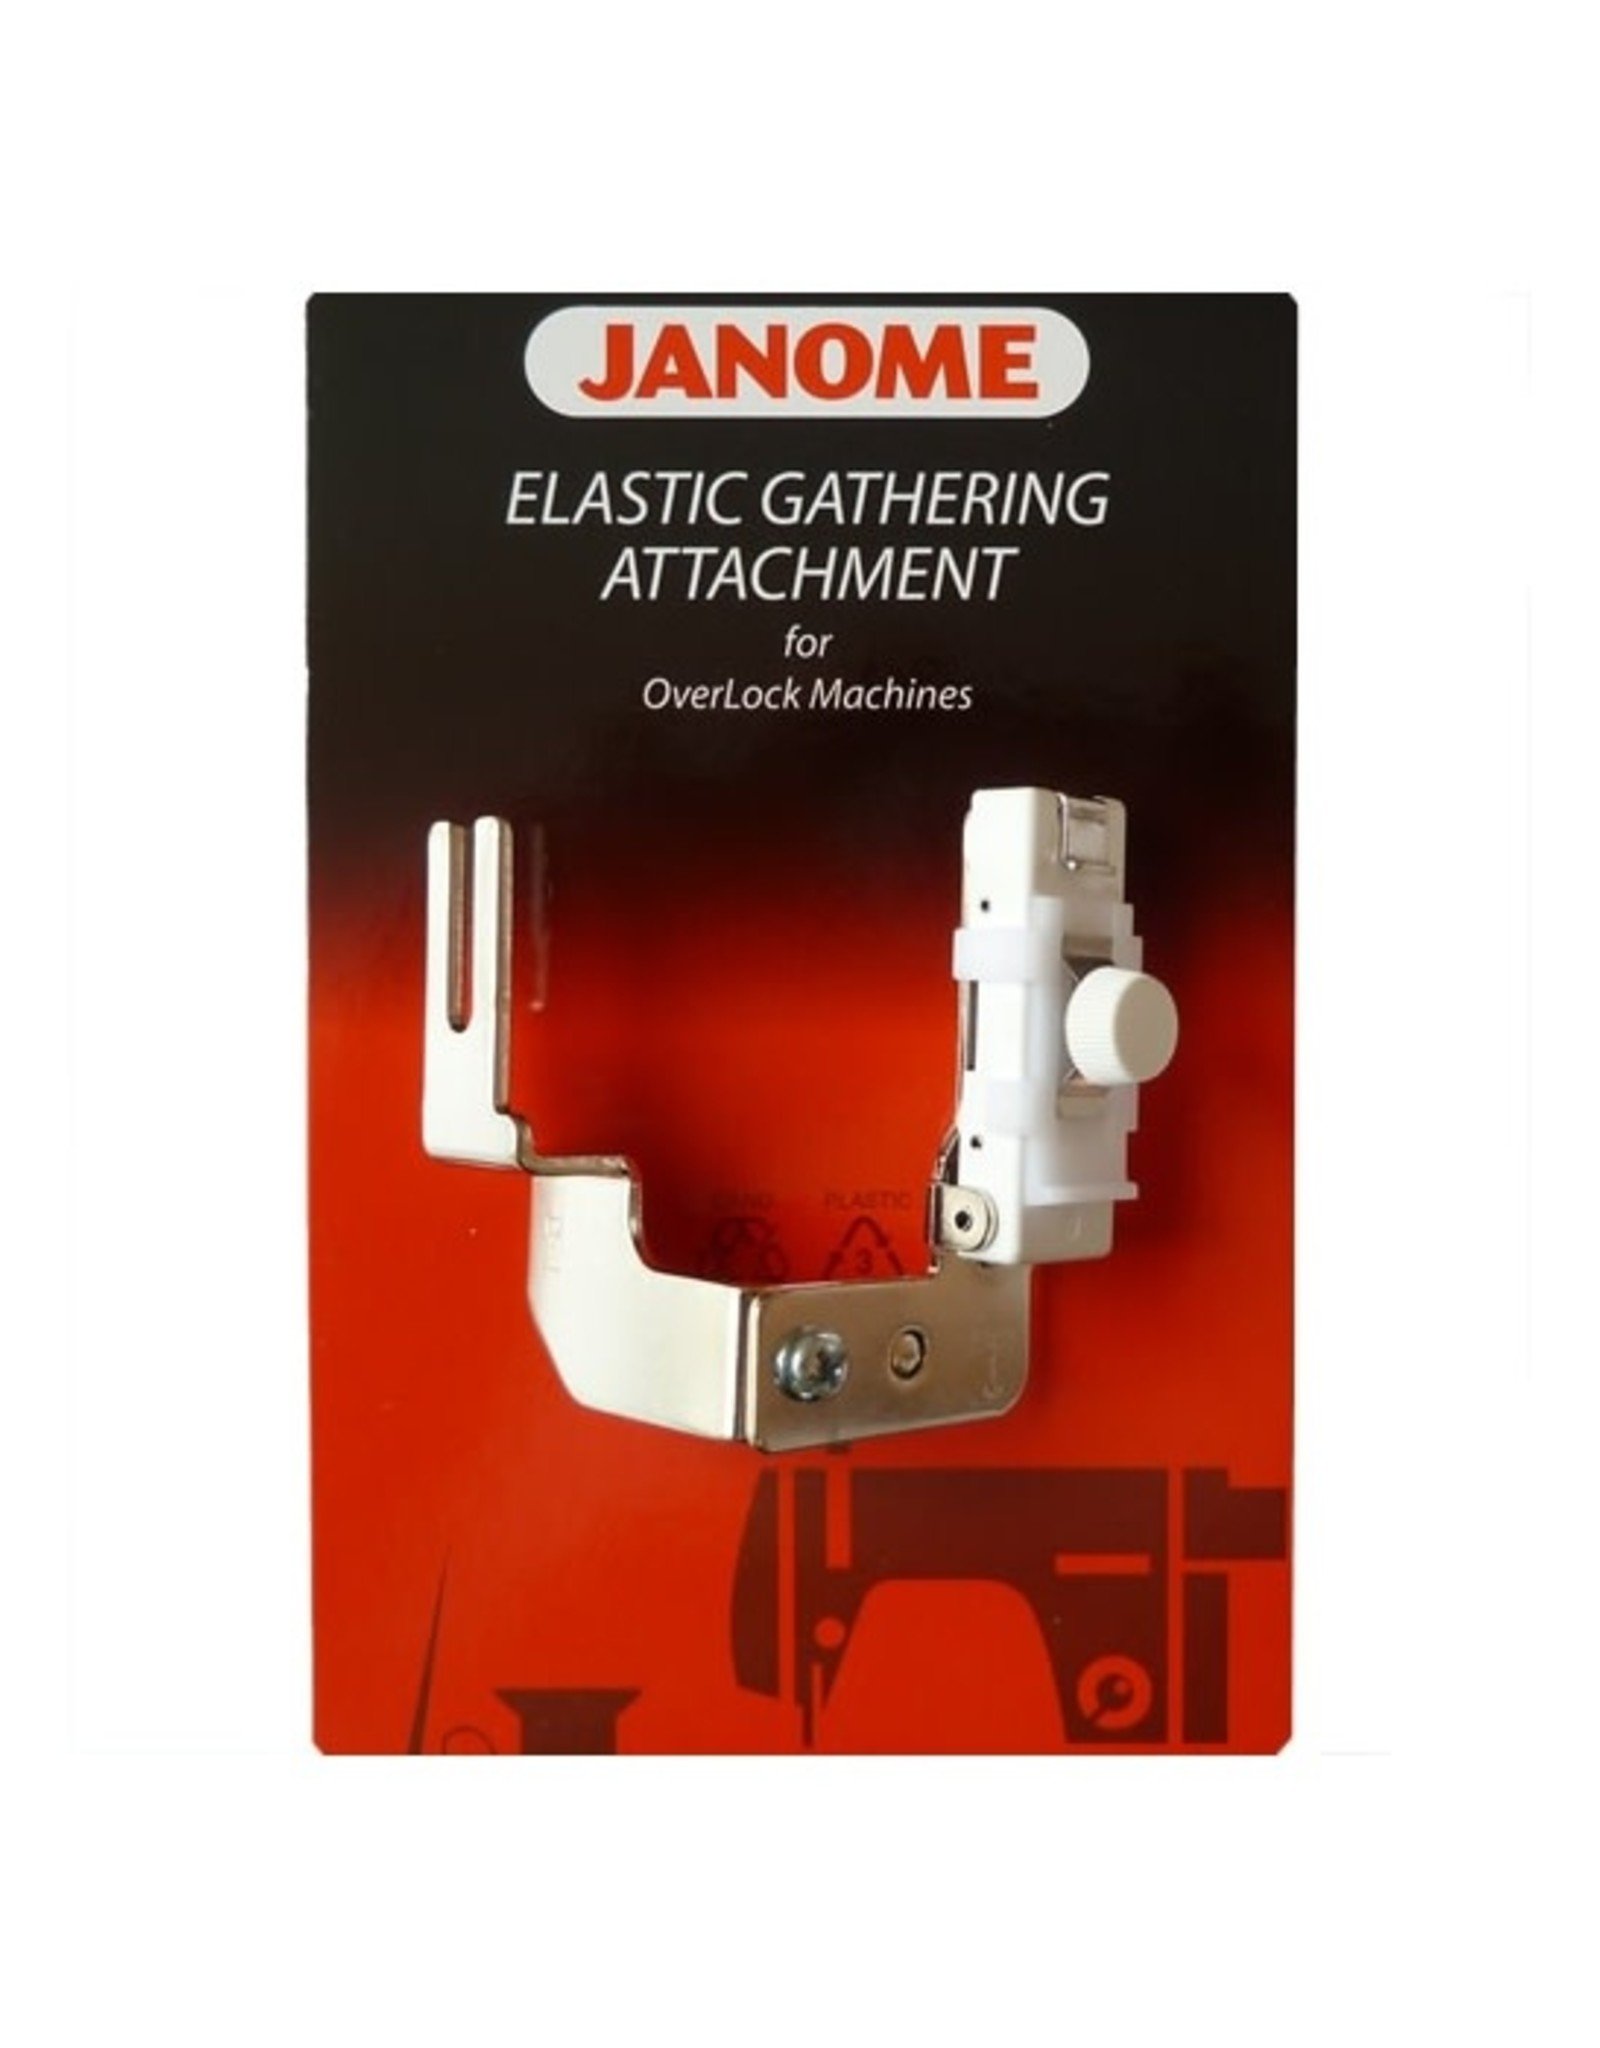 Janome Elastic gathering attachment for overlock machines - 202037008